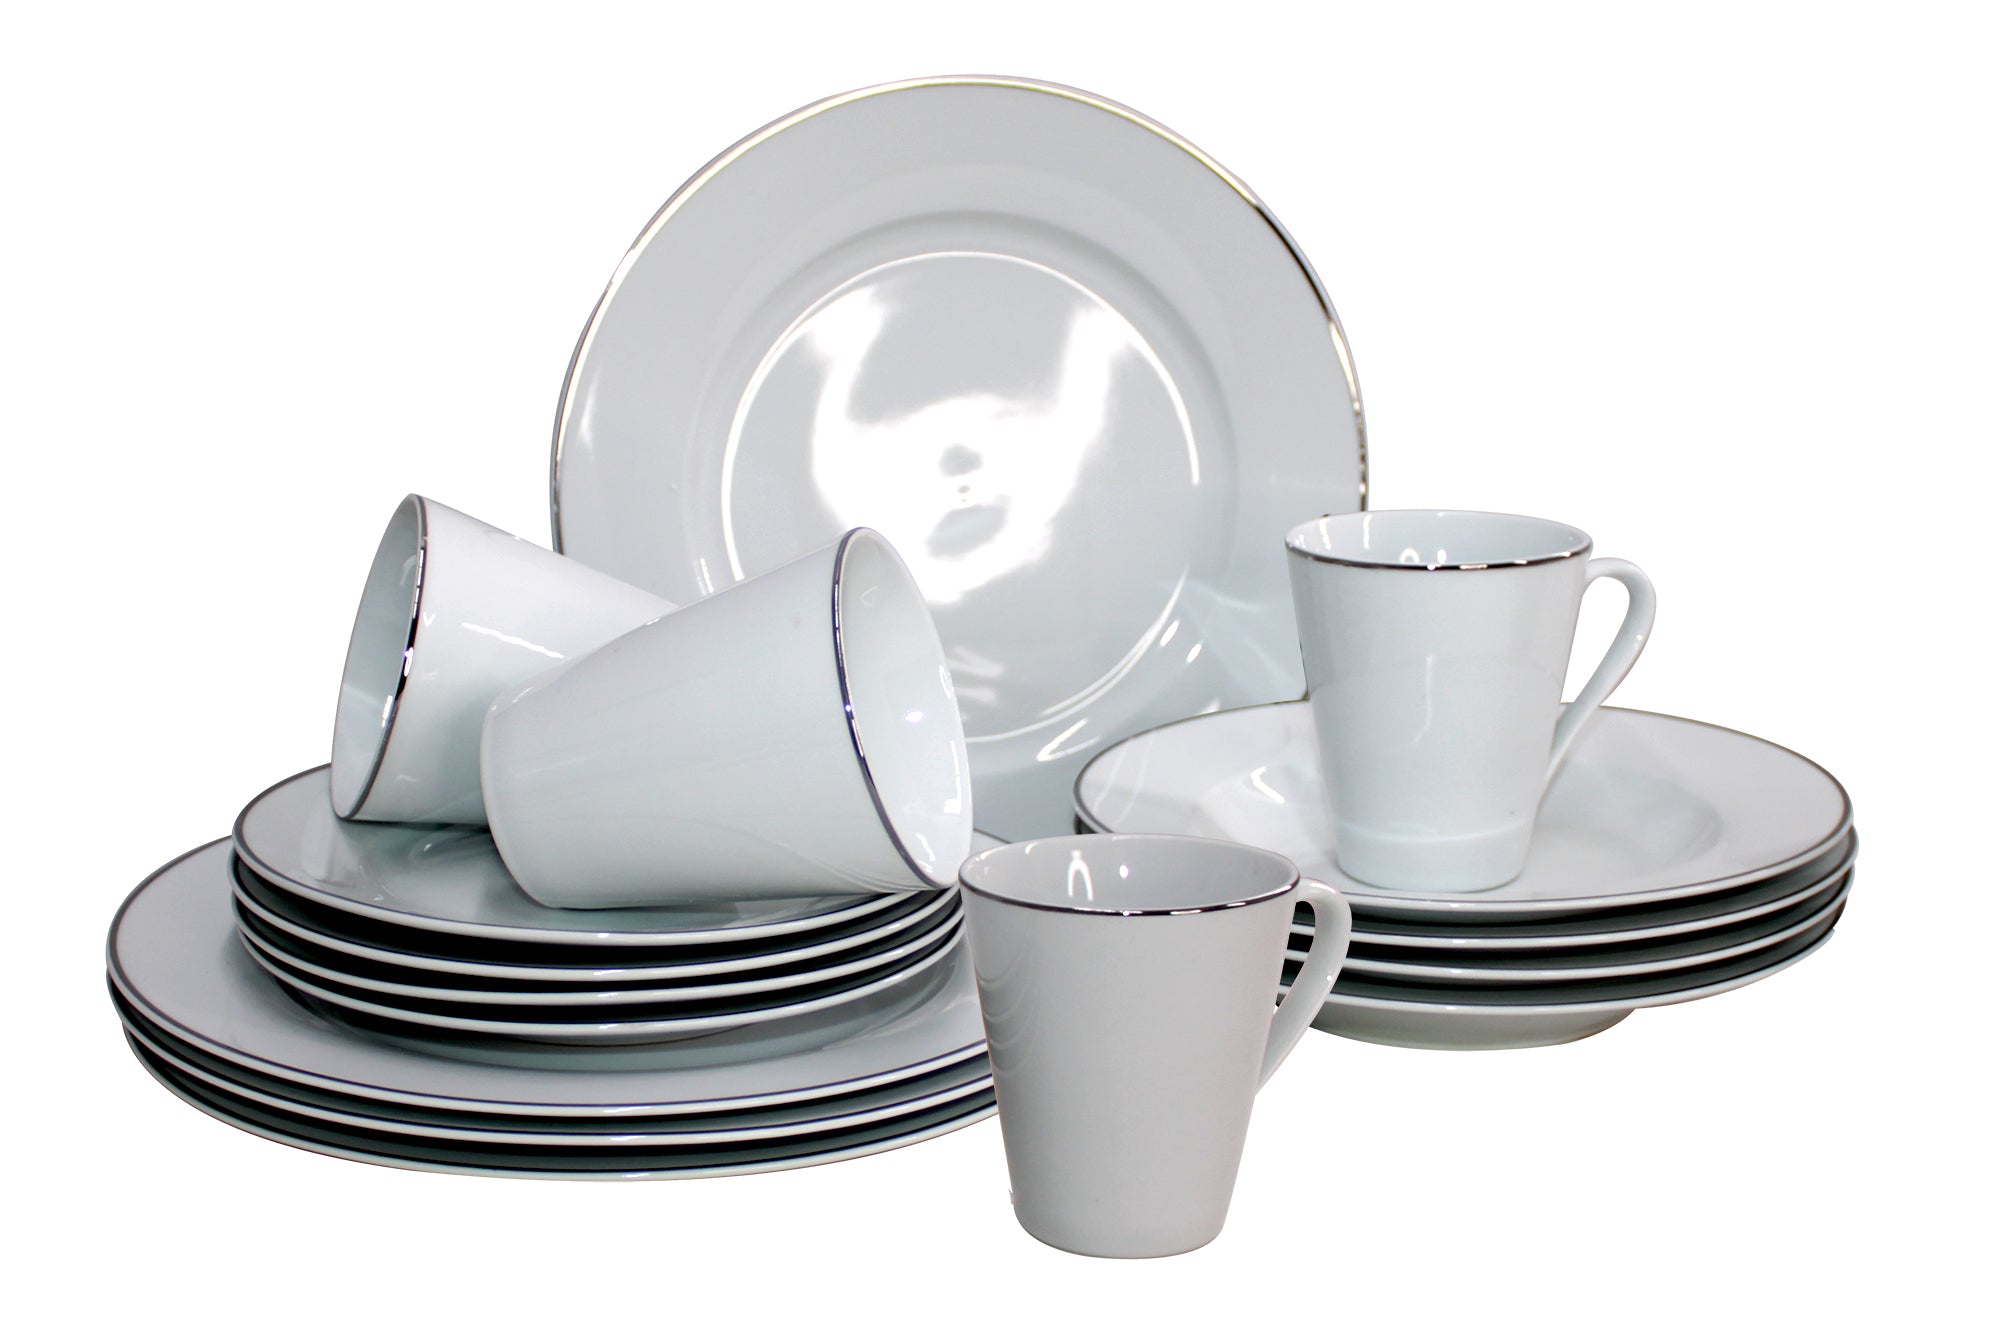 16 Piece White Ceramic Dinnerware Set with Silver Trim